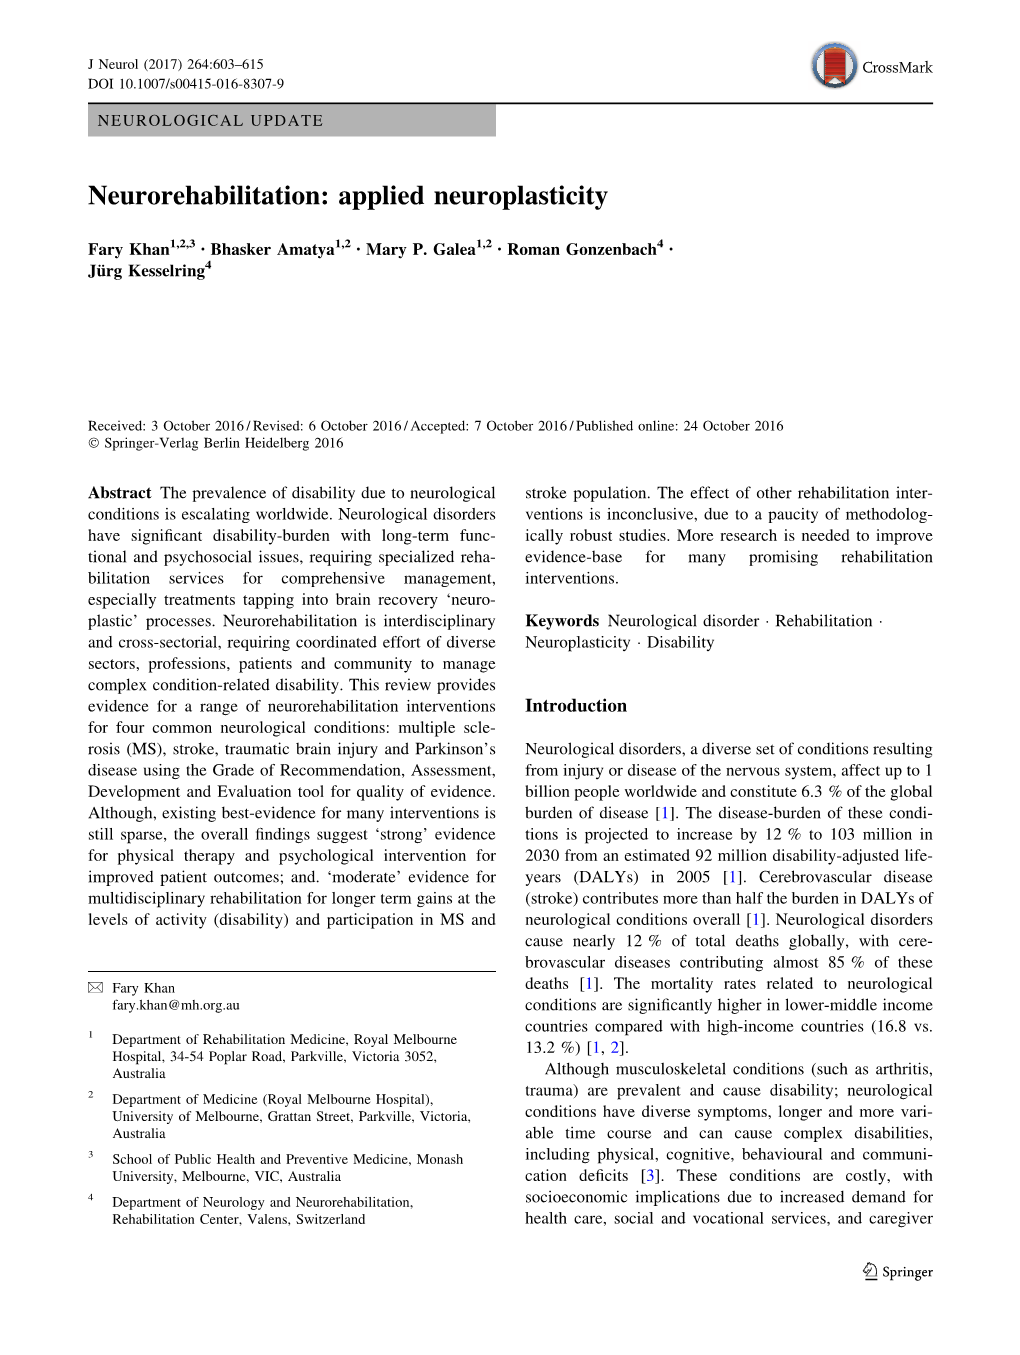 Neurorehabilitation: Applied Neuroplasticity